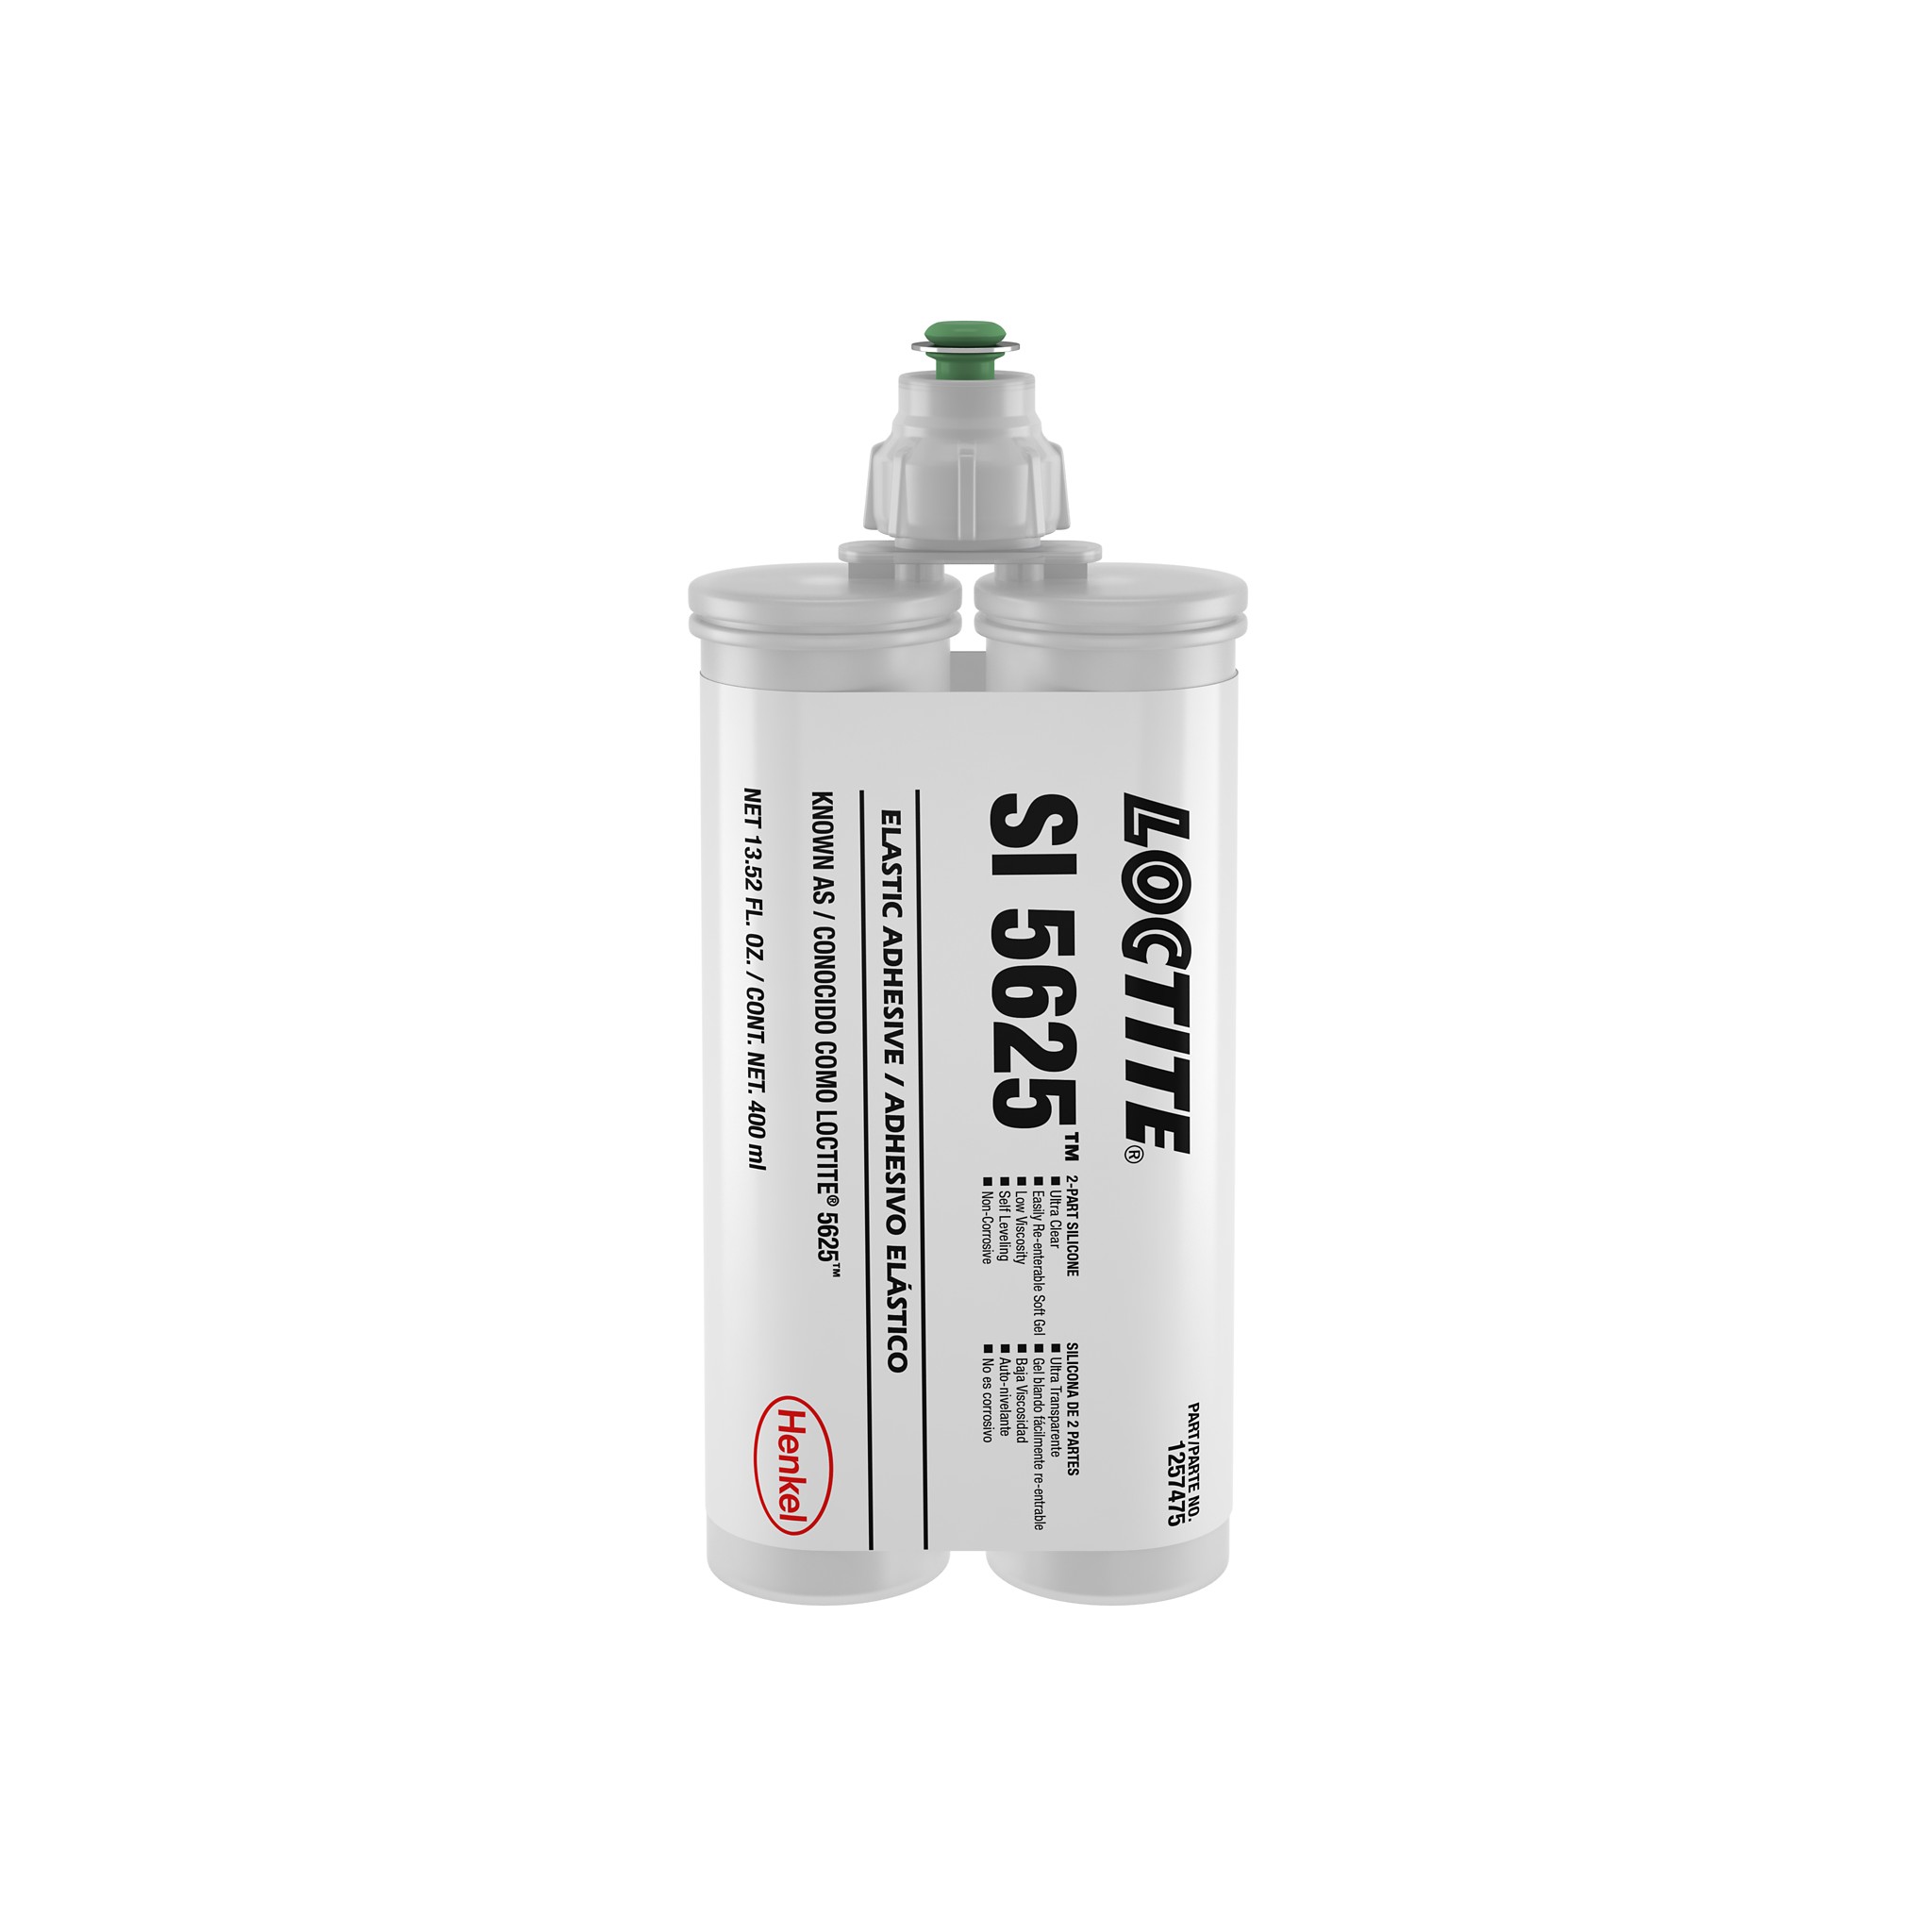 Loctite Silicone Adhesive Sealant - 0.5 oz Tube IDH:1266142